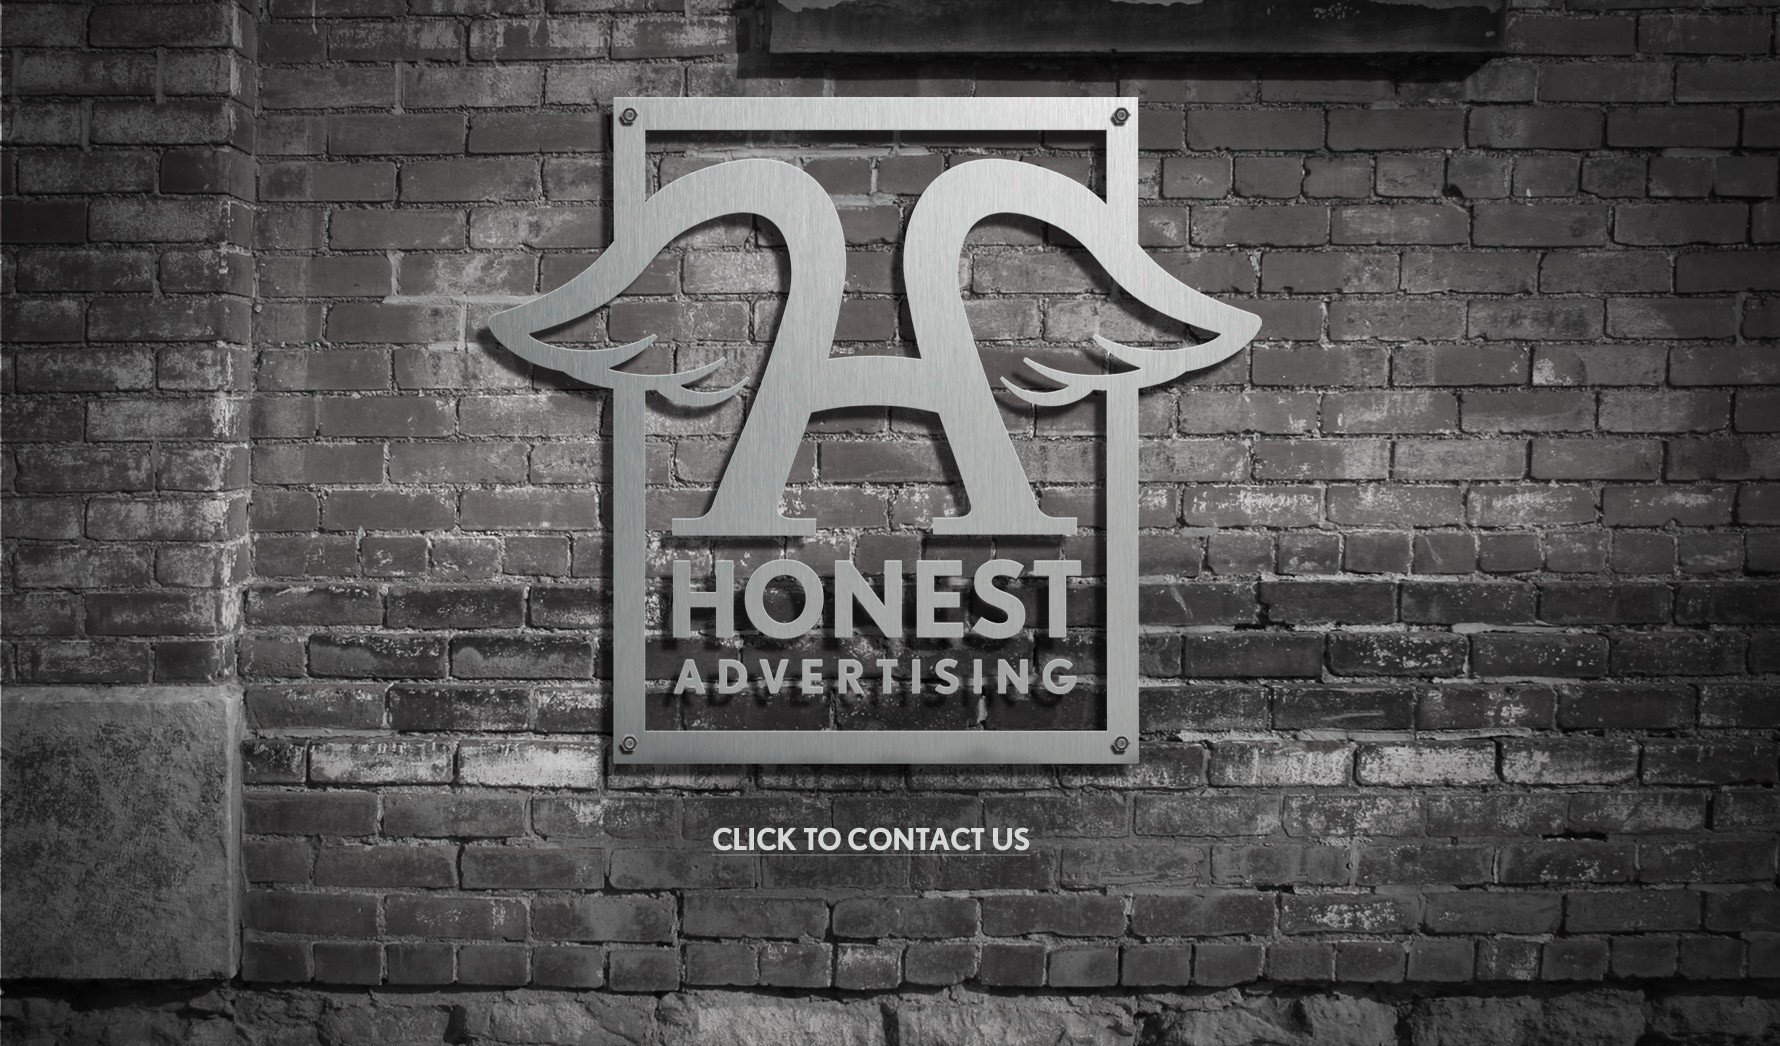 Contact Honest Advertising